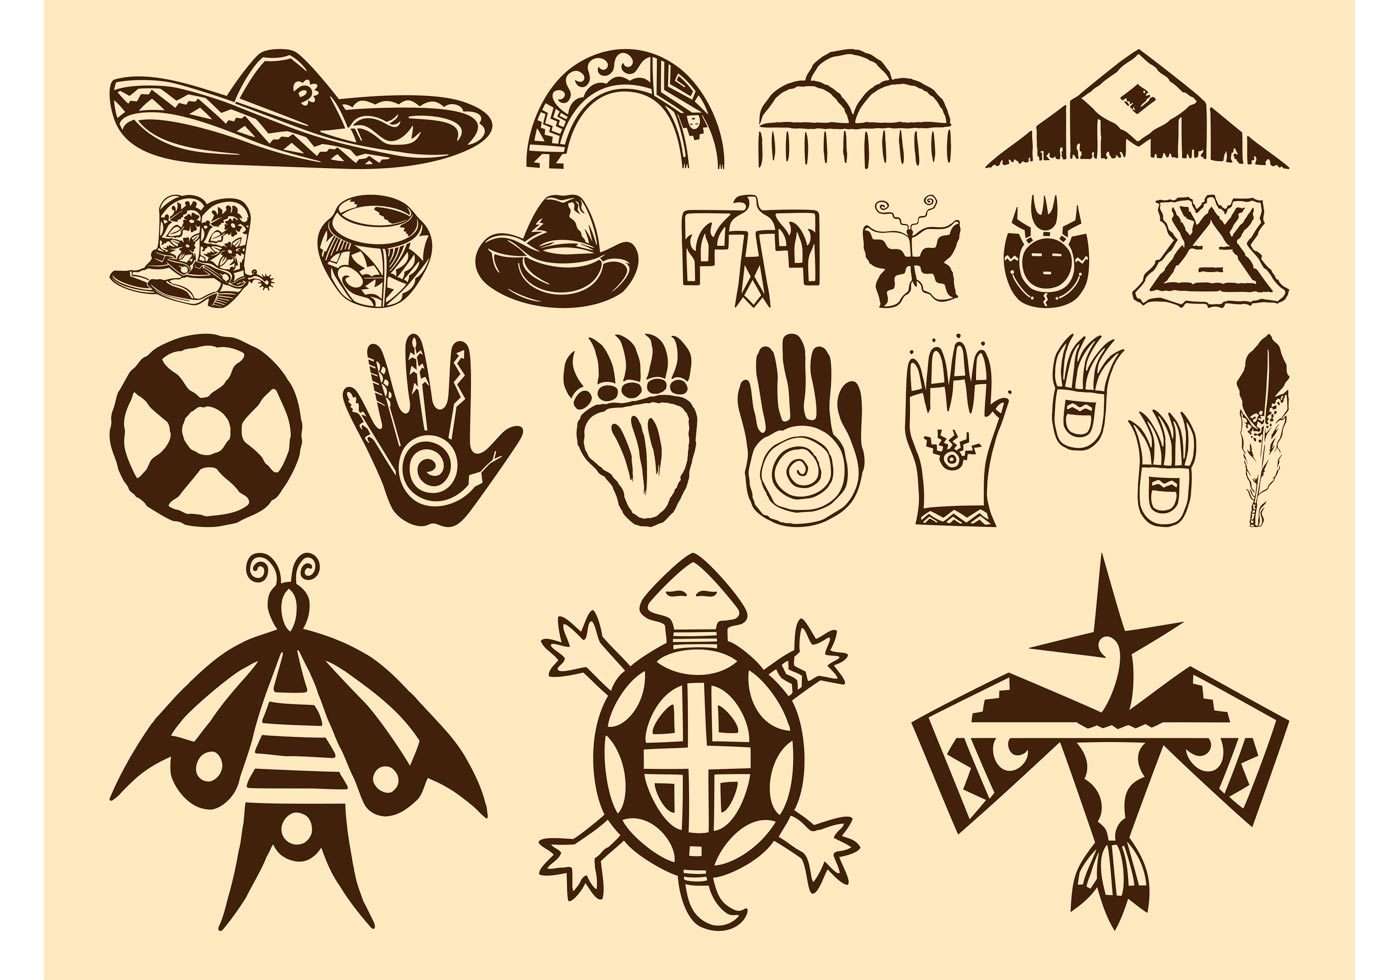 Native American Symbols - Download Free Vector Art, Stock Graphics & Images